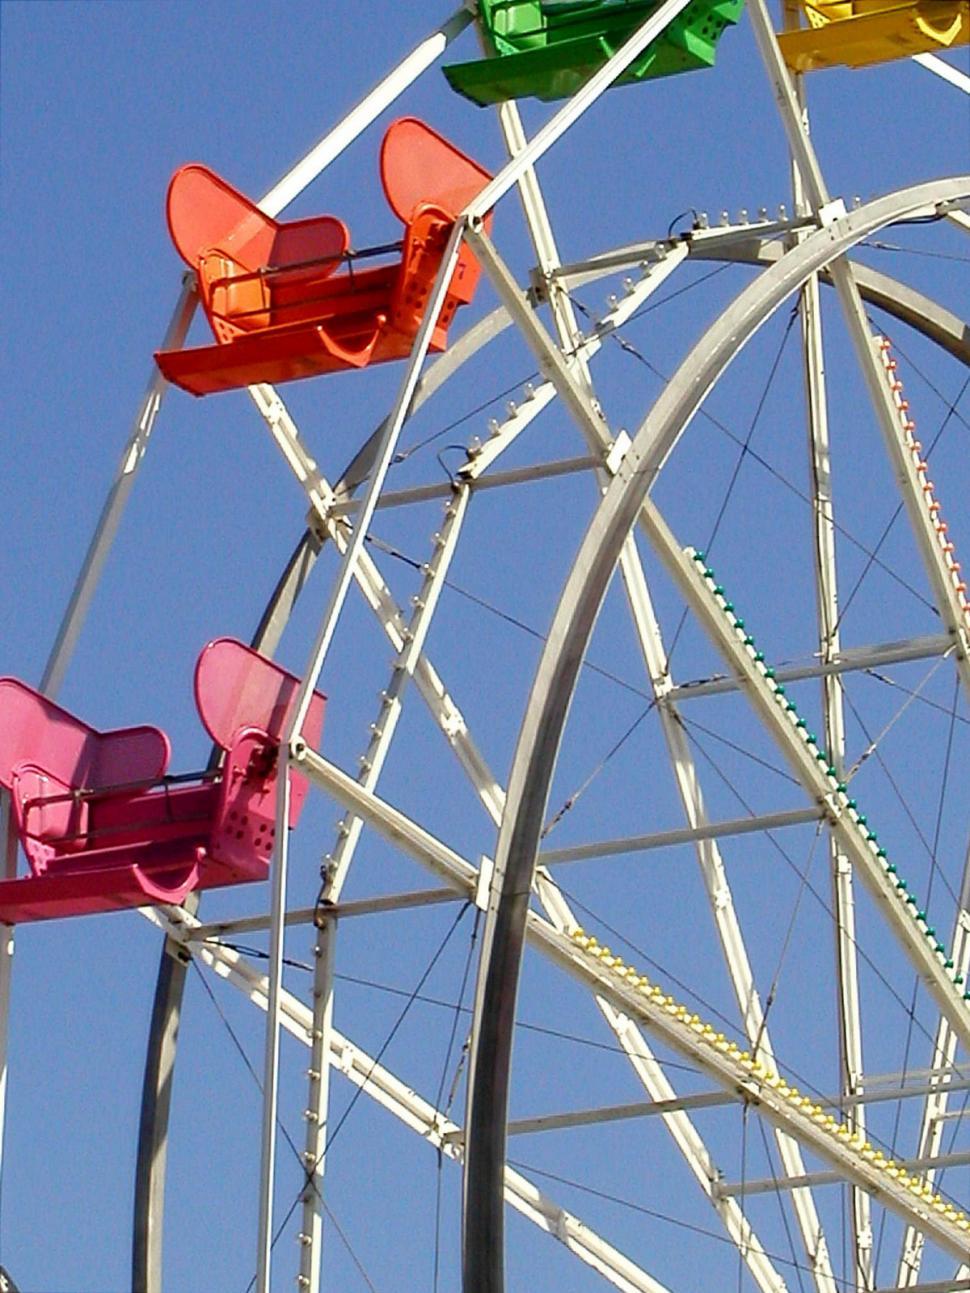 Free Image of Ferris Wheel 